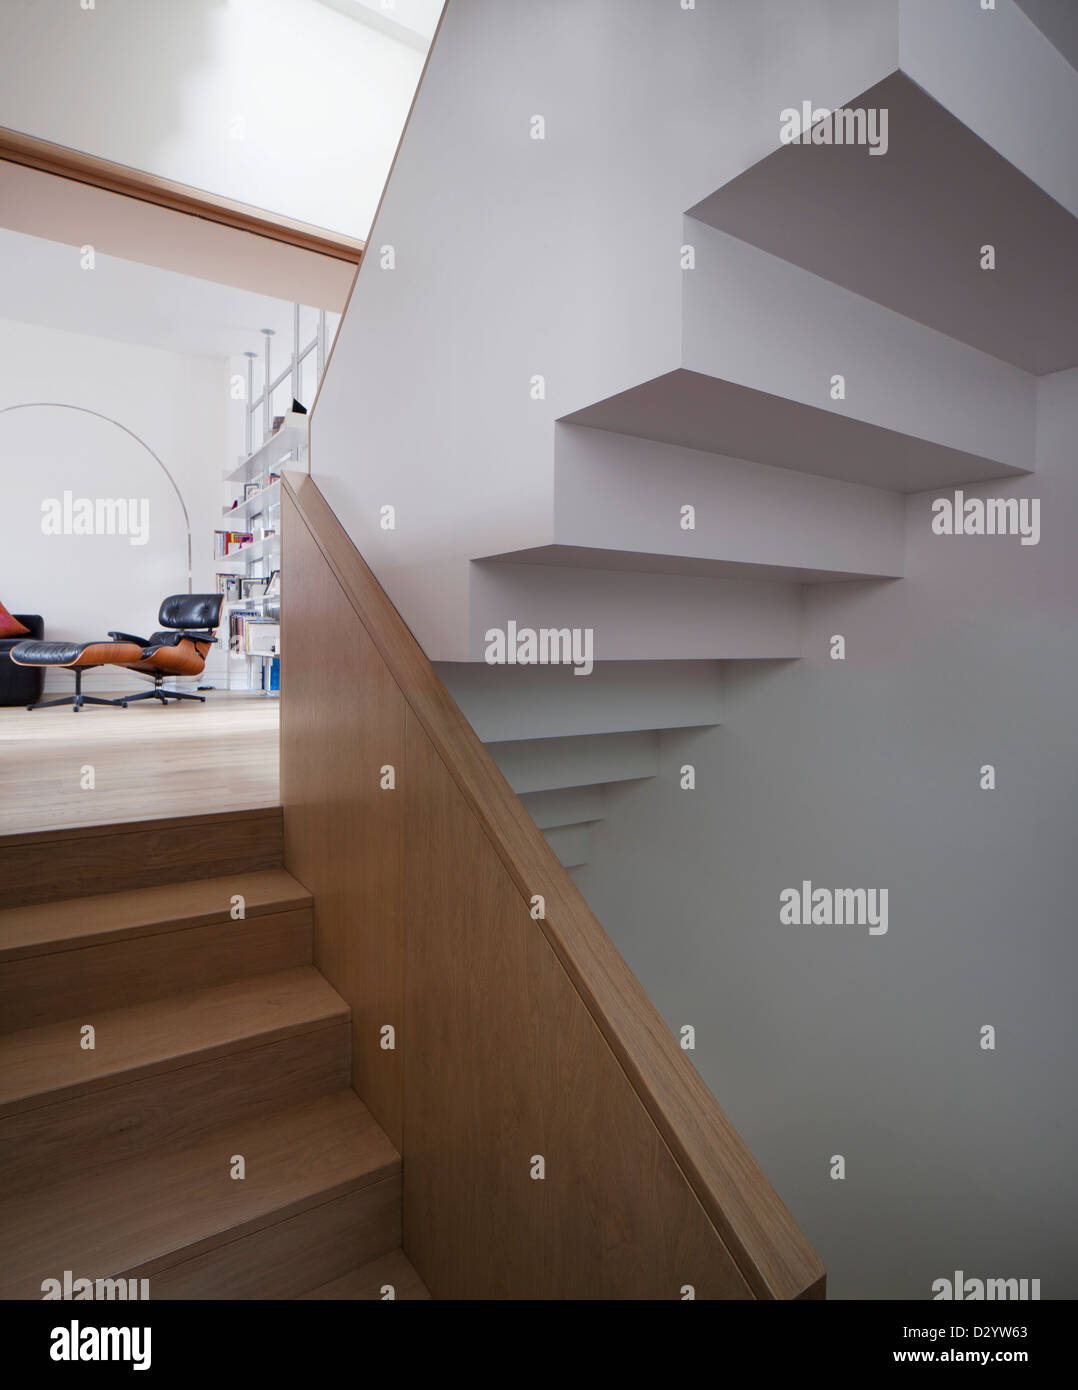 Cohen House, London, United Kingdom. Architect: Duggan Morris Architects Ltd, 2012. Stairwell. Stock Photo